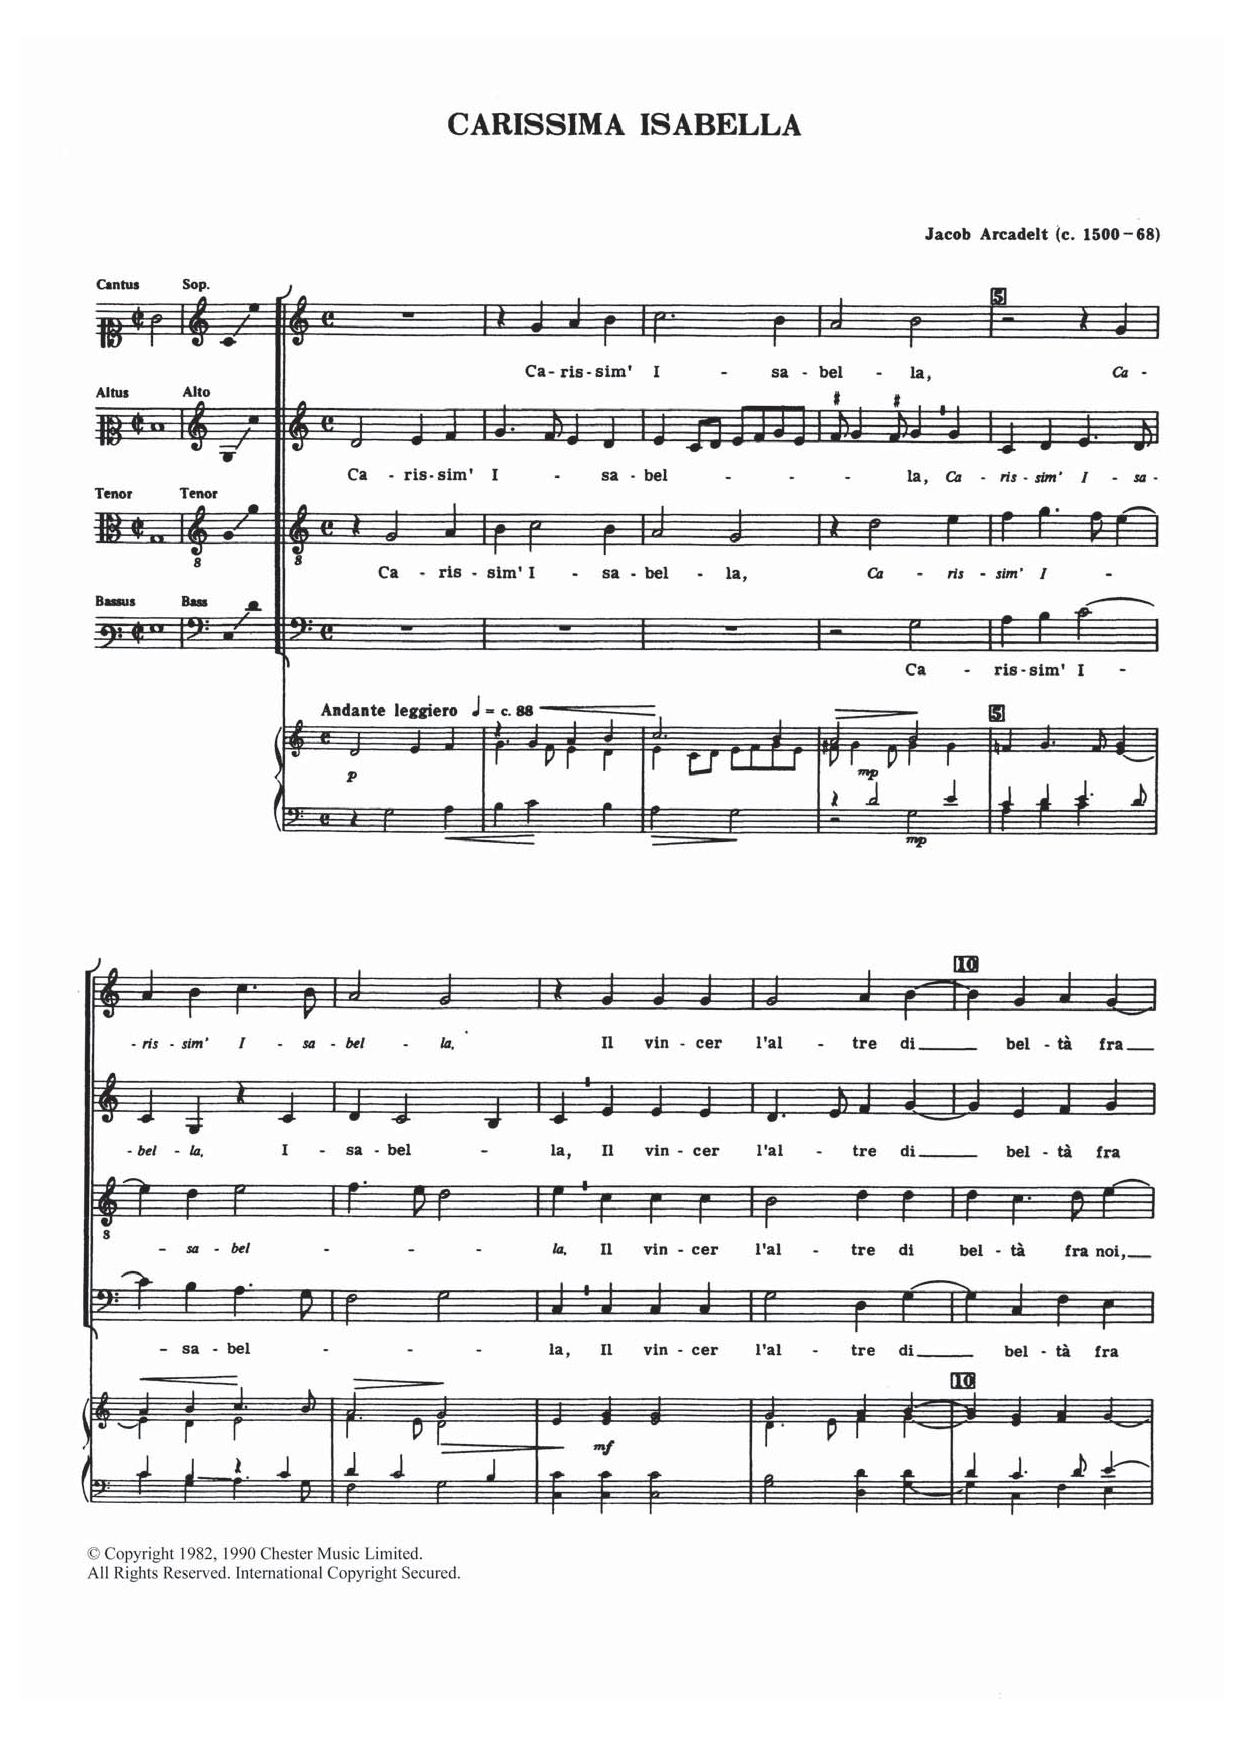 Jacob Arcadelt Carissima Isabella Sheet Music Notes & Chords for Choir - Download or Print PDF